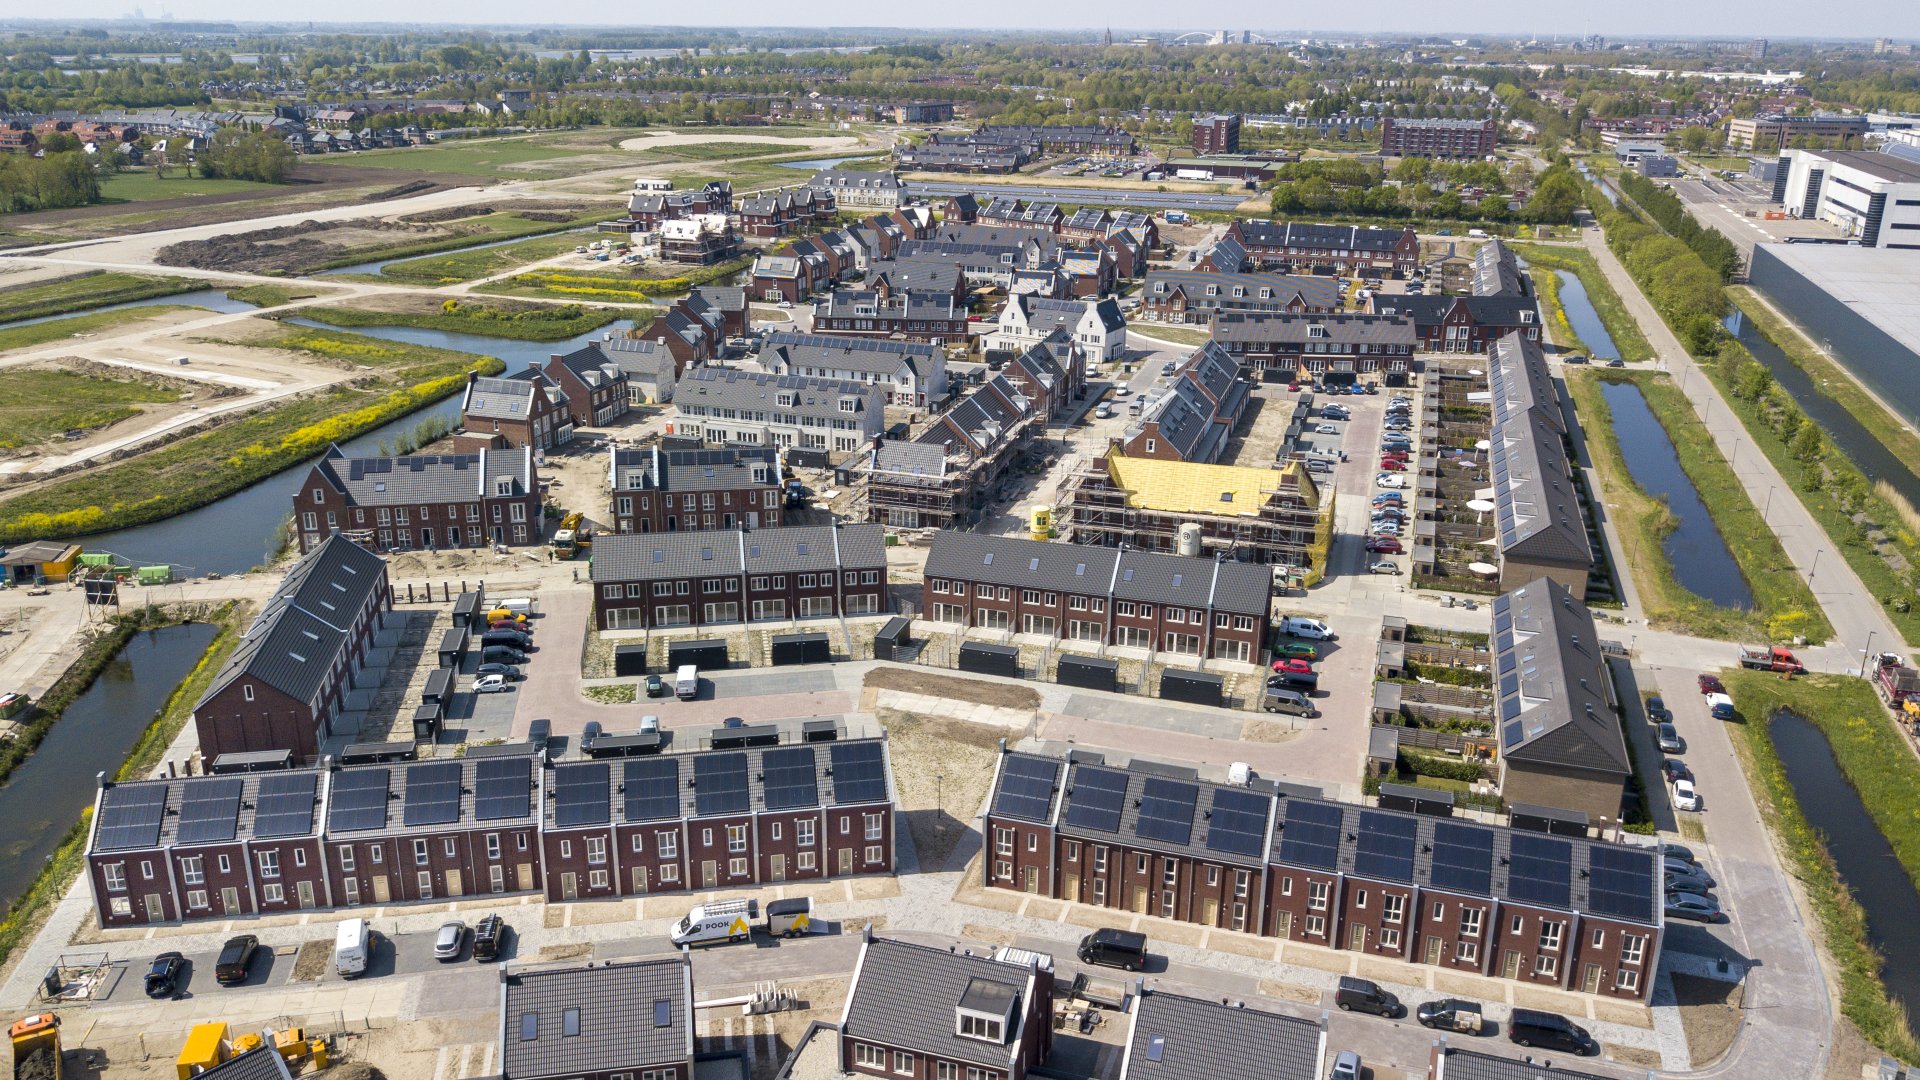 Gorinchem Hoog Dalem Heijmans Huismerk conceptwoningen woonwijk.jpg